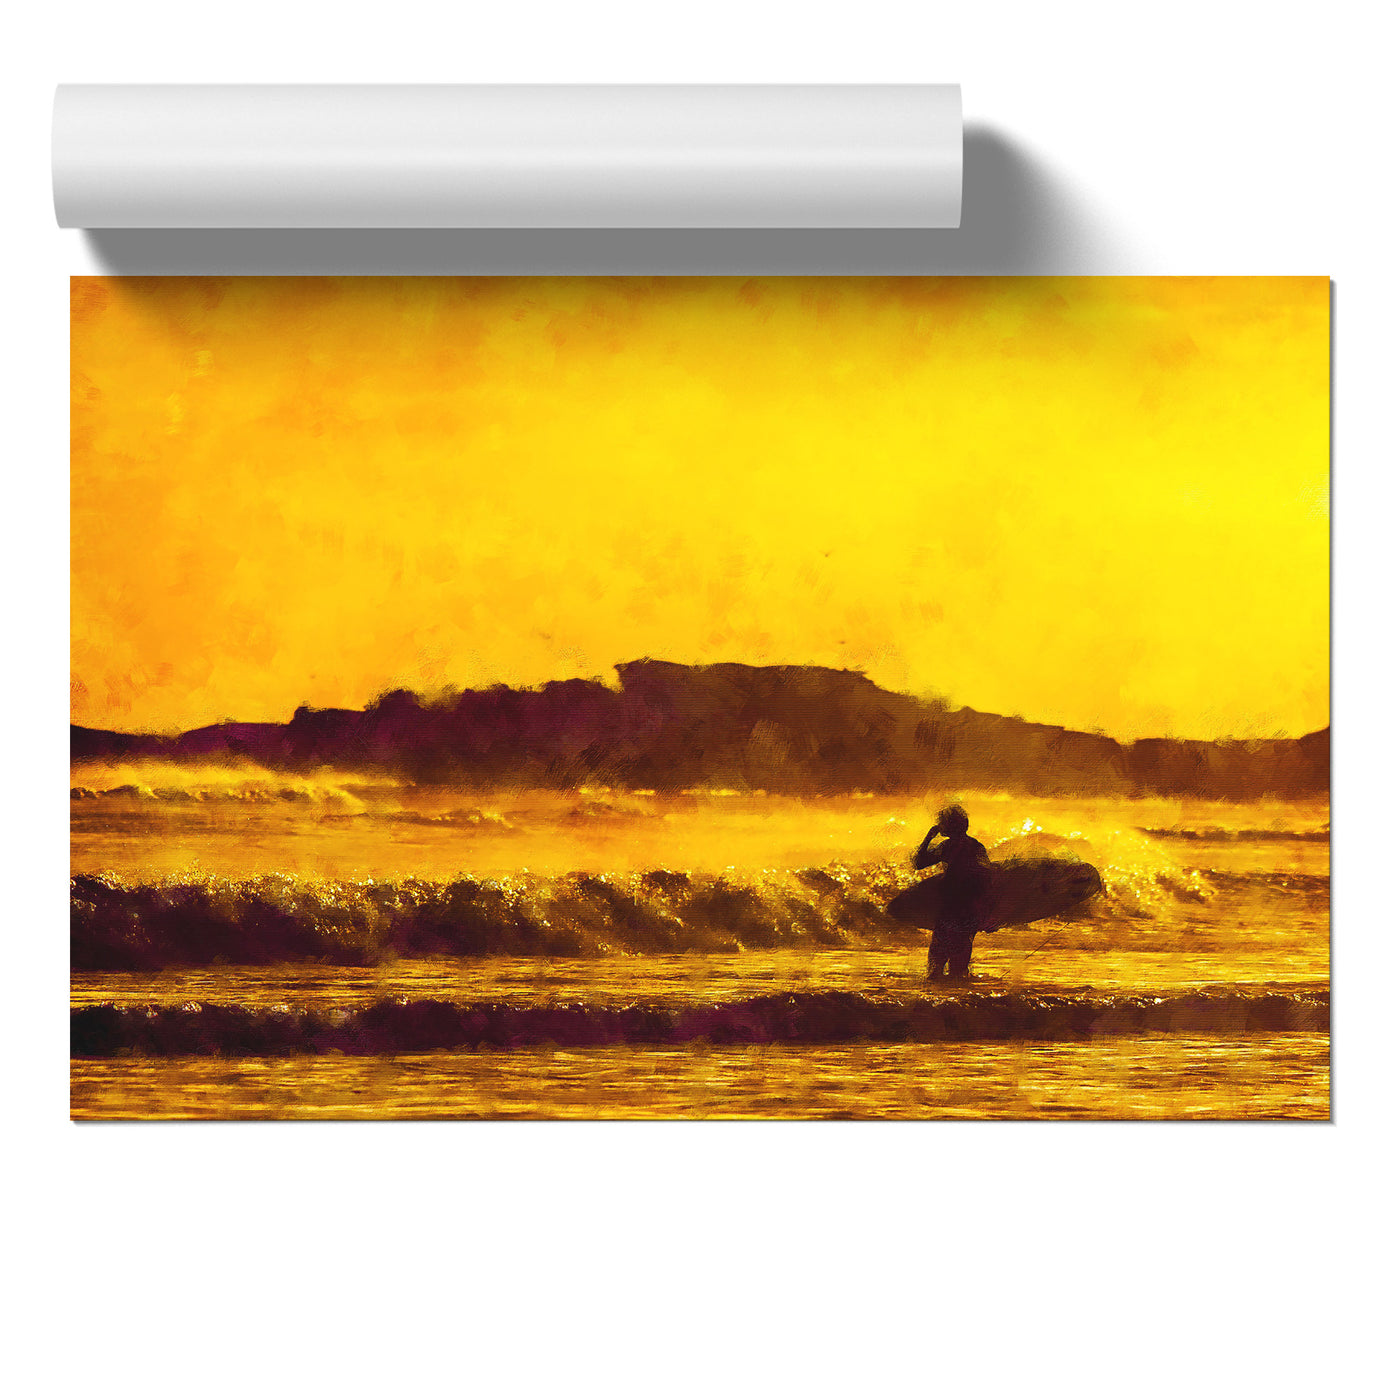 Man Surfing At Sunset